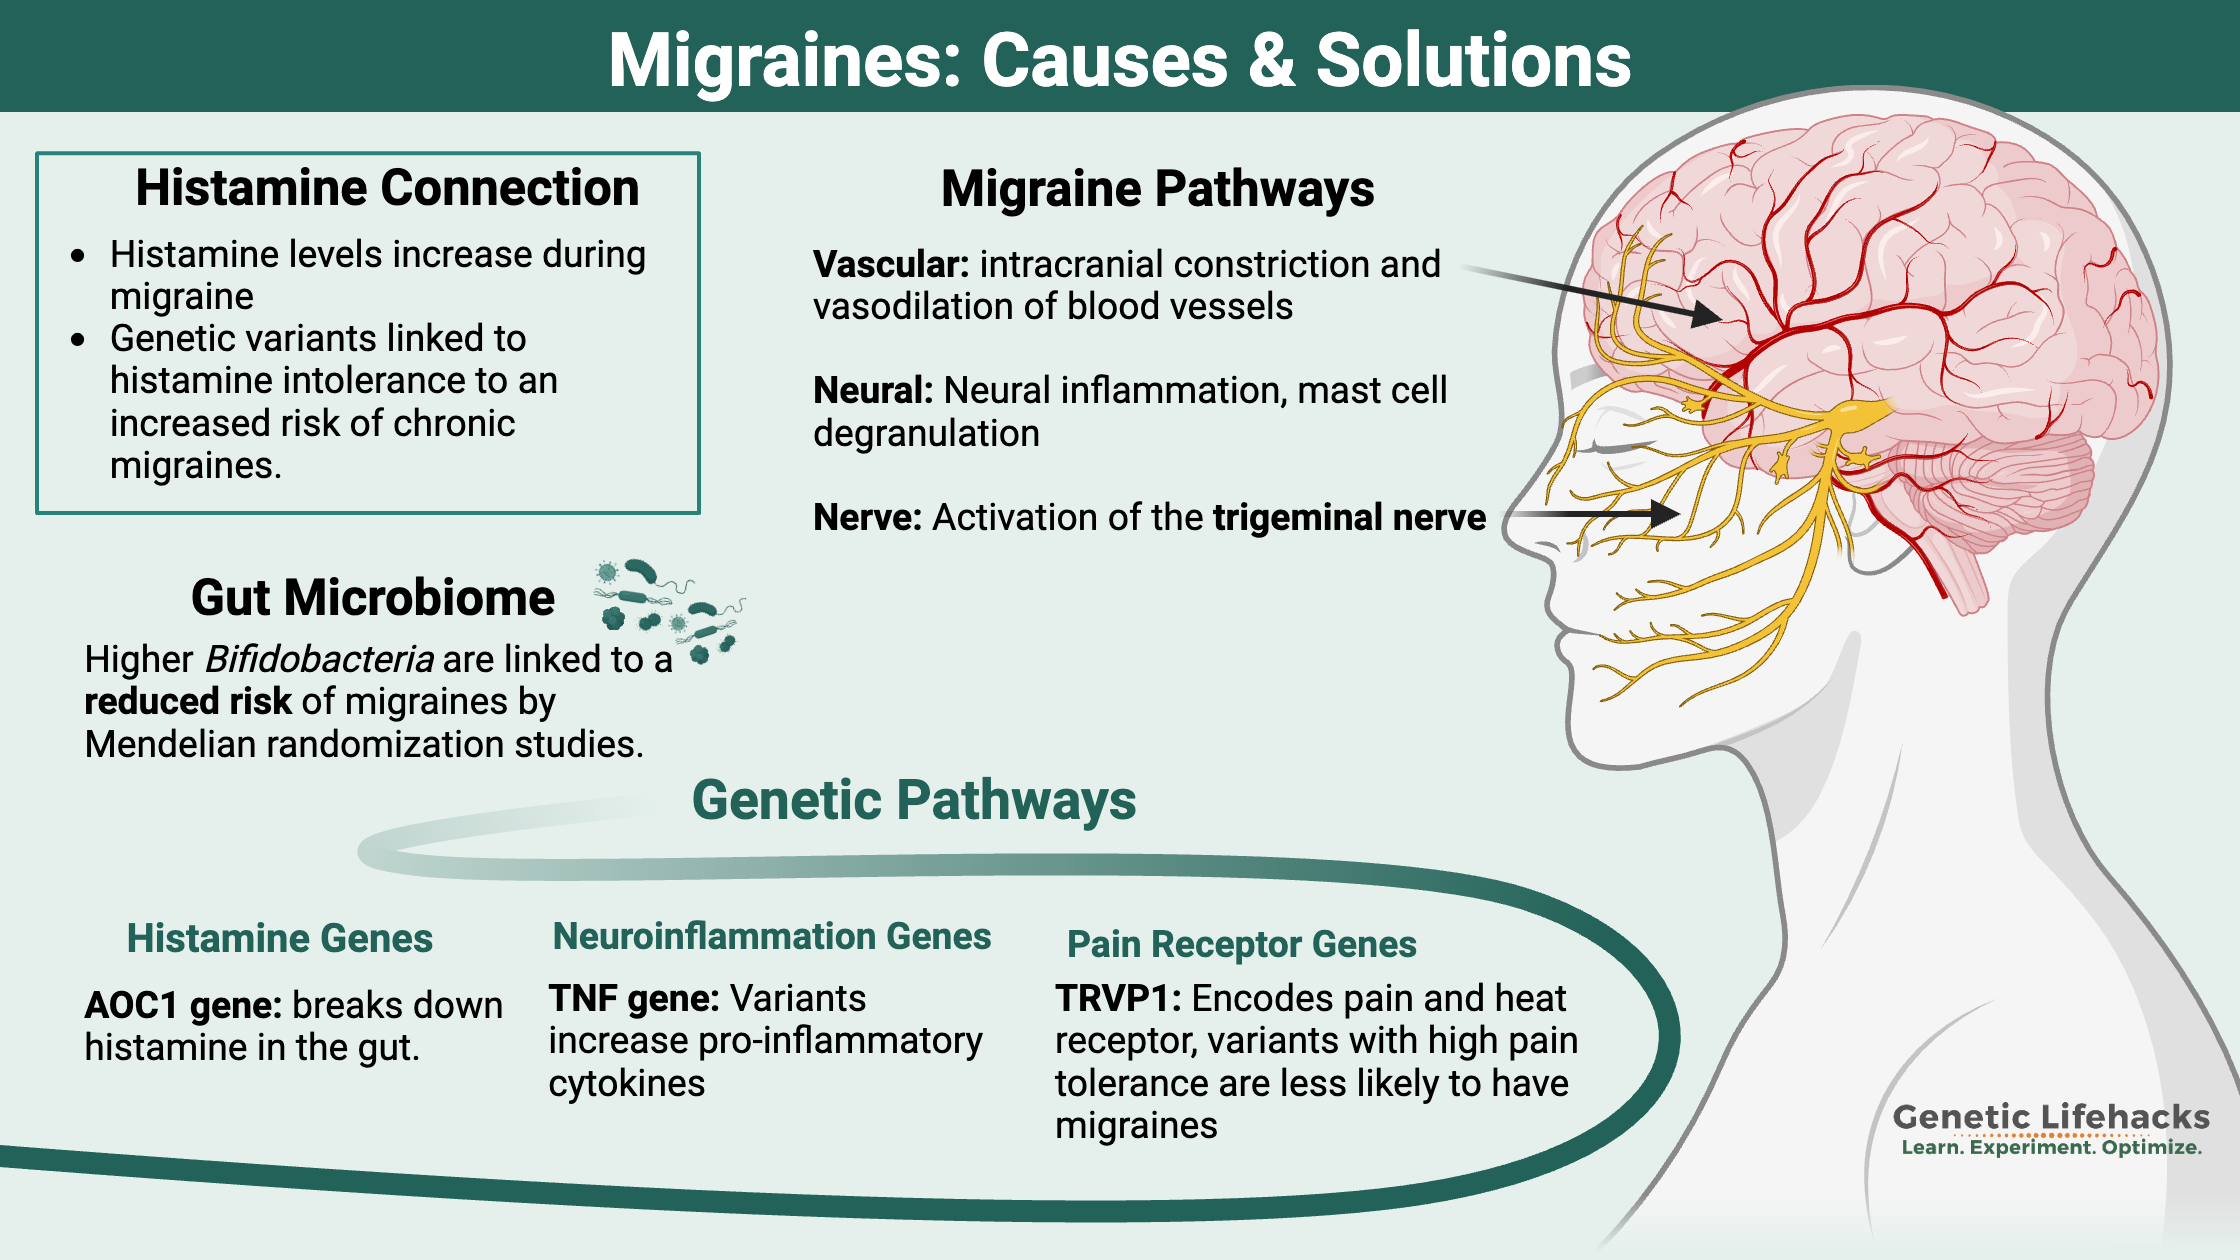 Migraines, histamine and migraines, migraine pathways, genetic causes of migraines